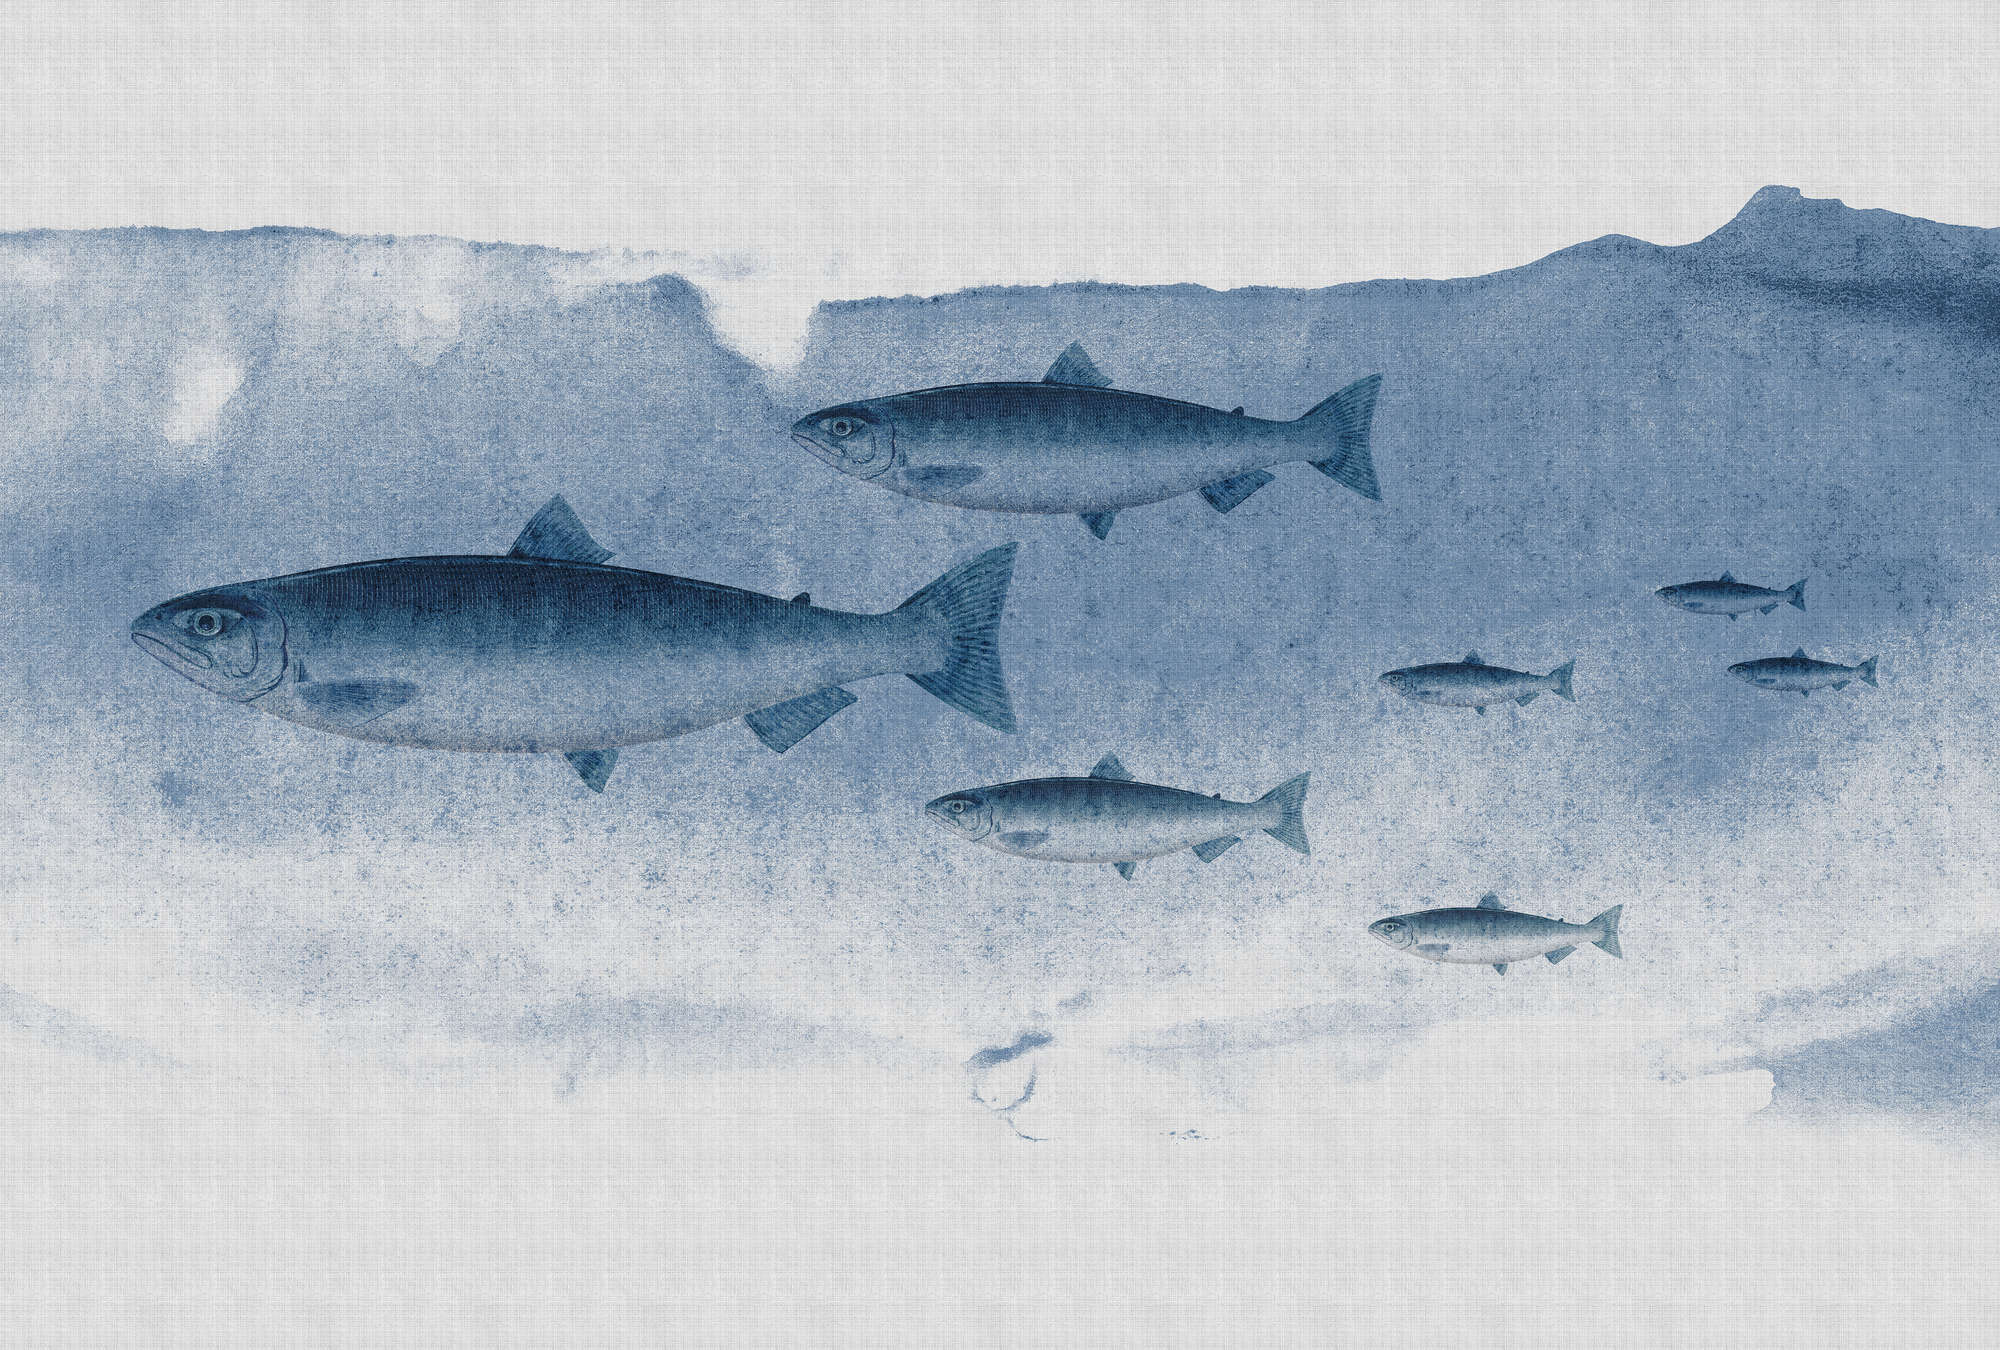             Into the blue 1 - Fisch Aquarell in Blau als Fototapete in naturleinen Struktur – Blau, Grau | Premium Glattvlies
        